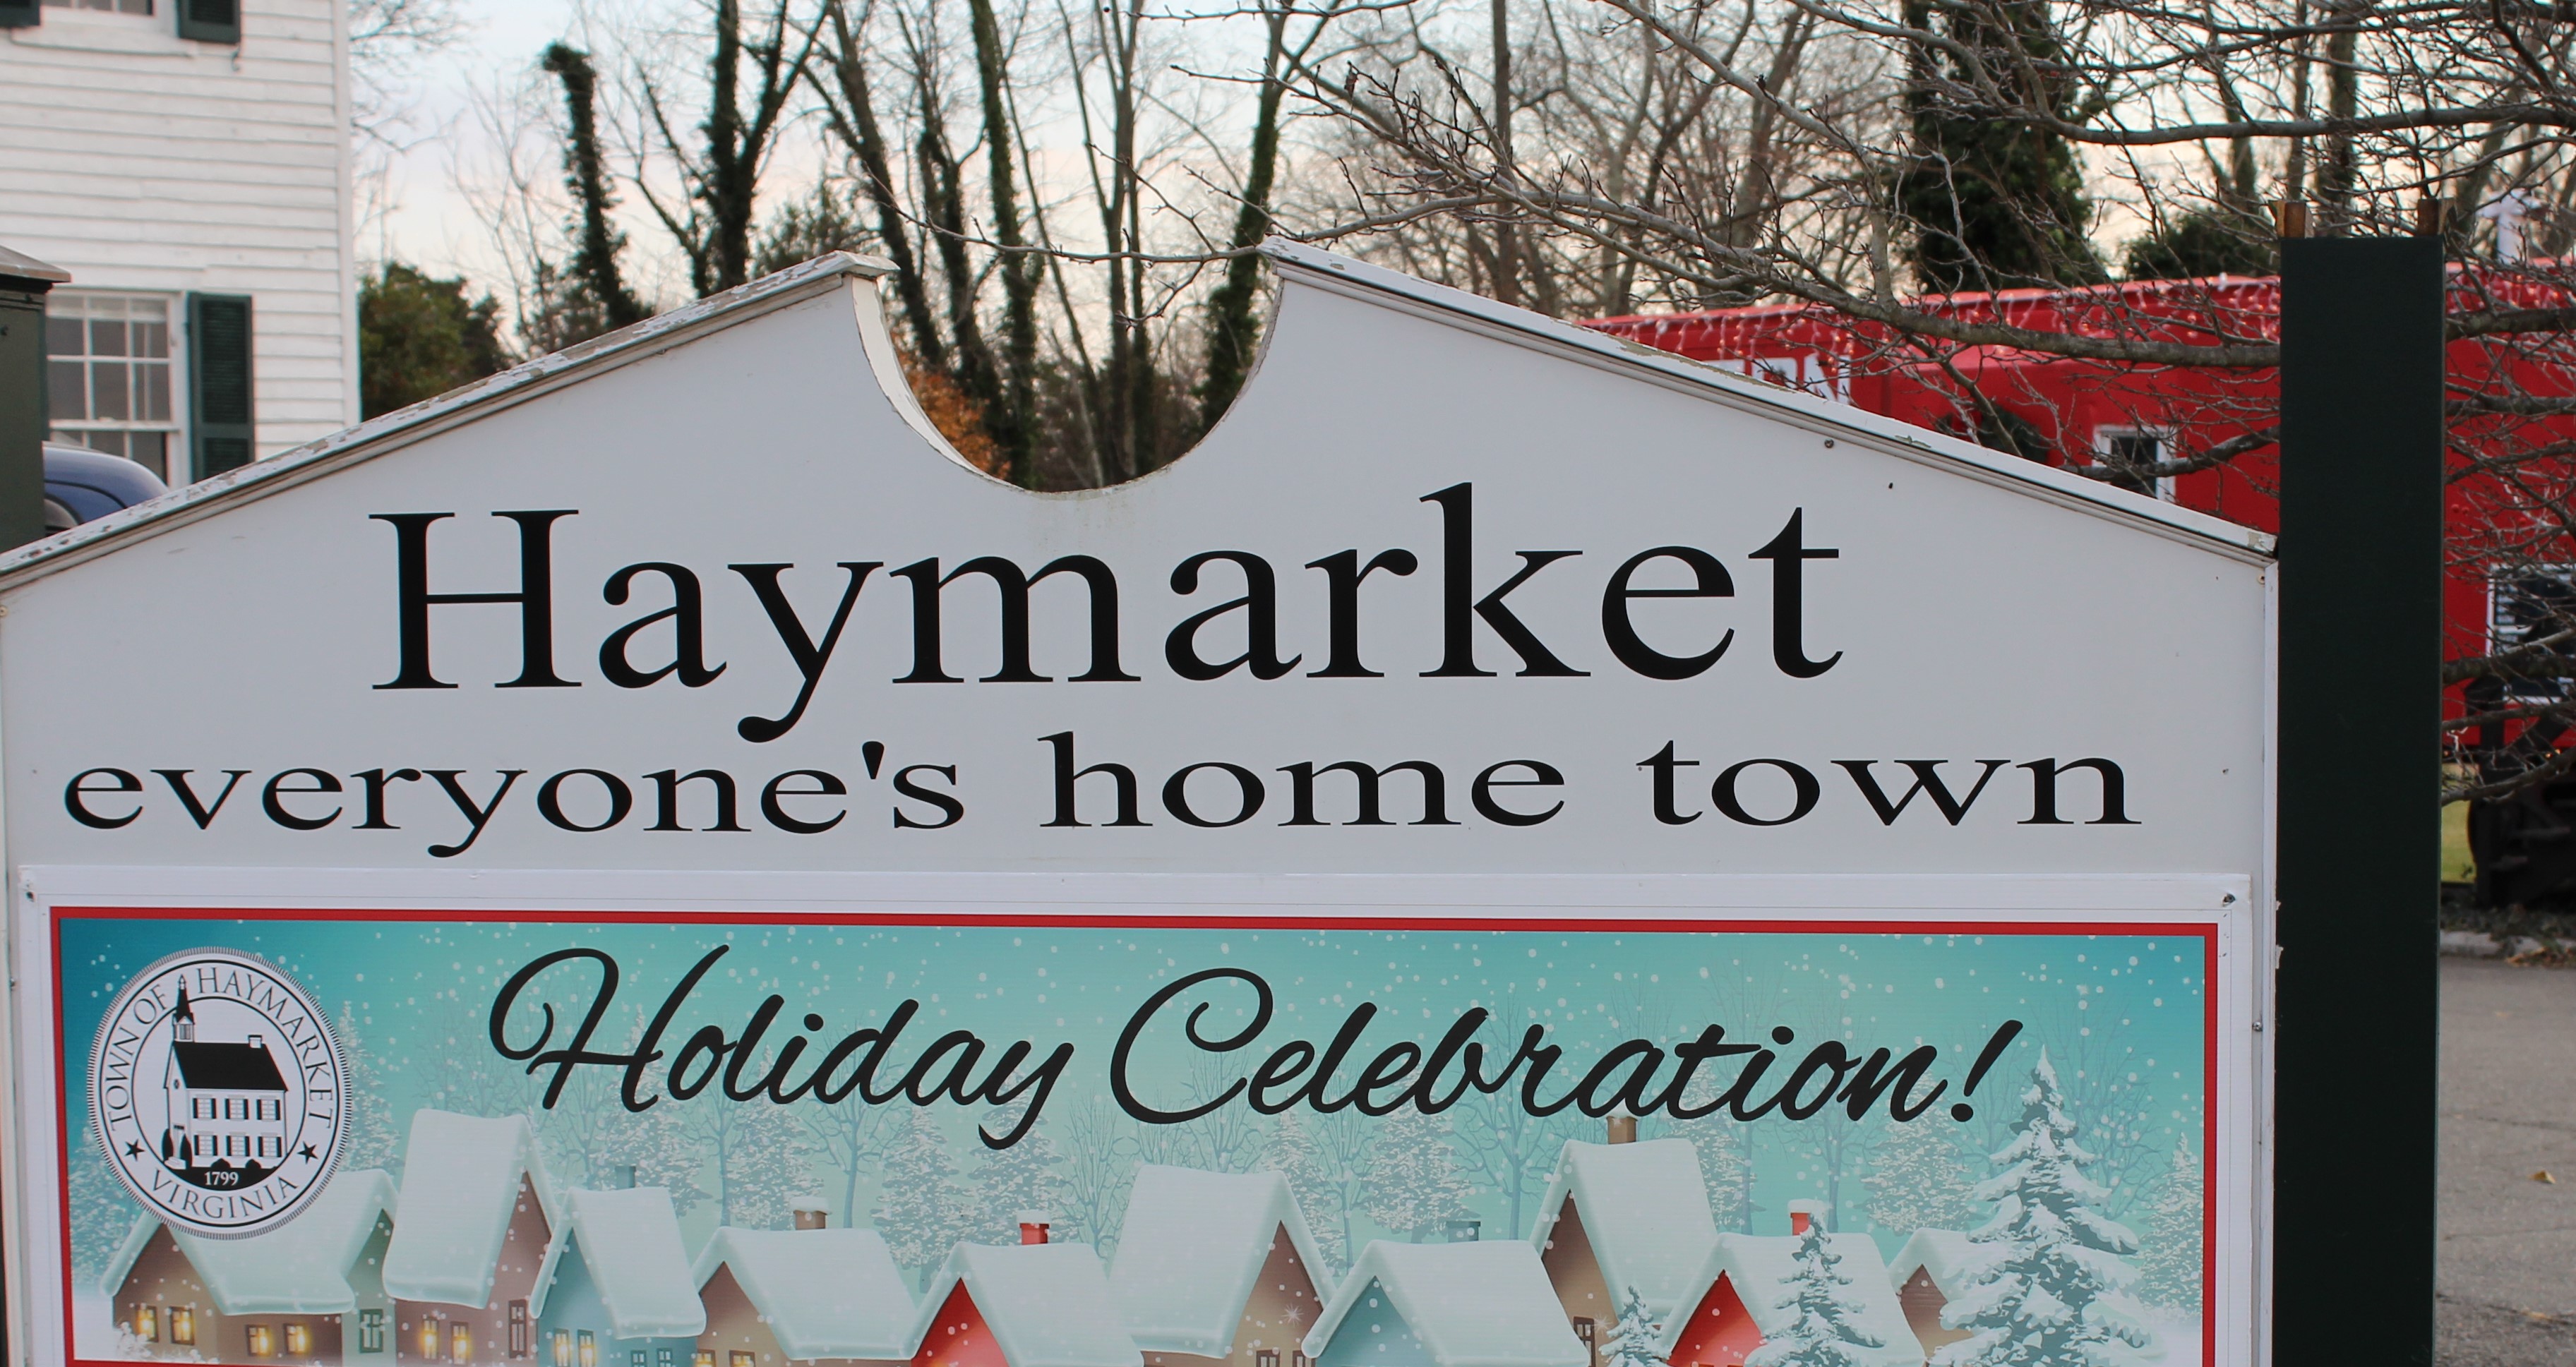 Town of Haymarket Holiday Celebration